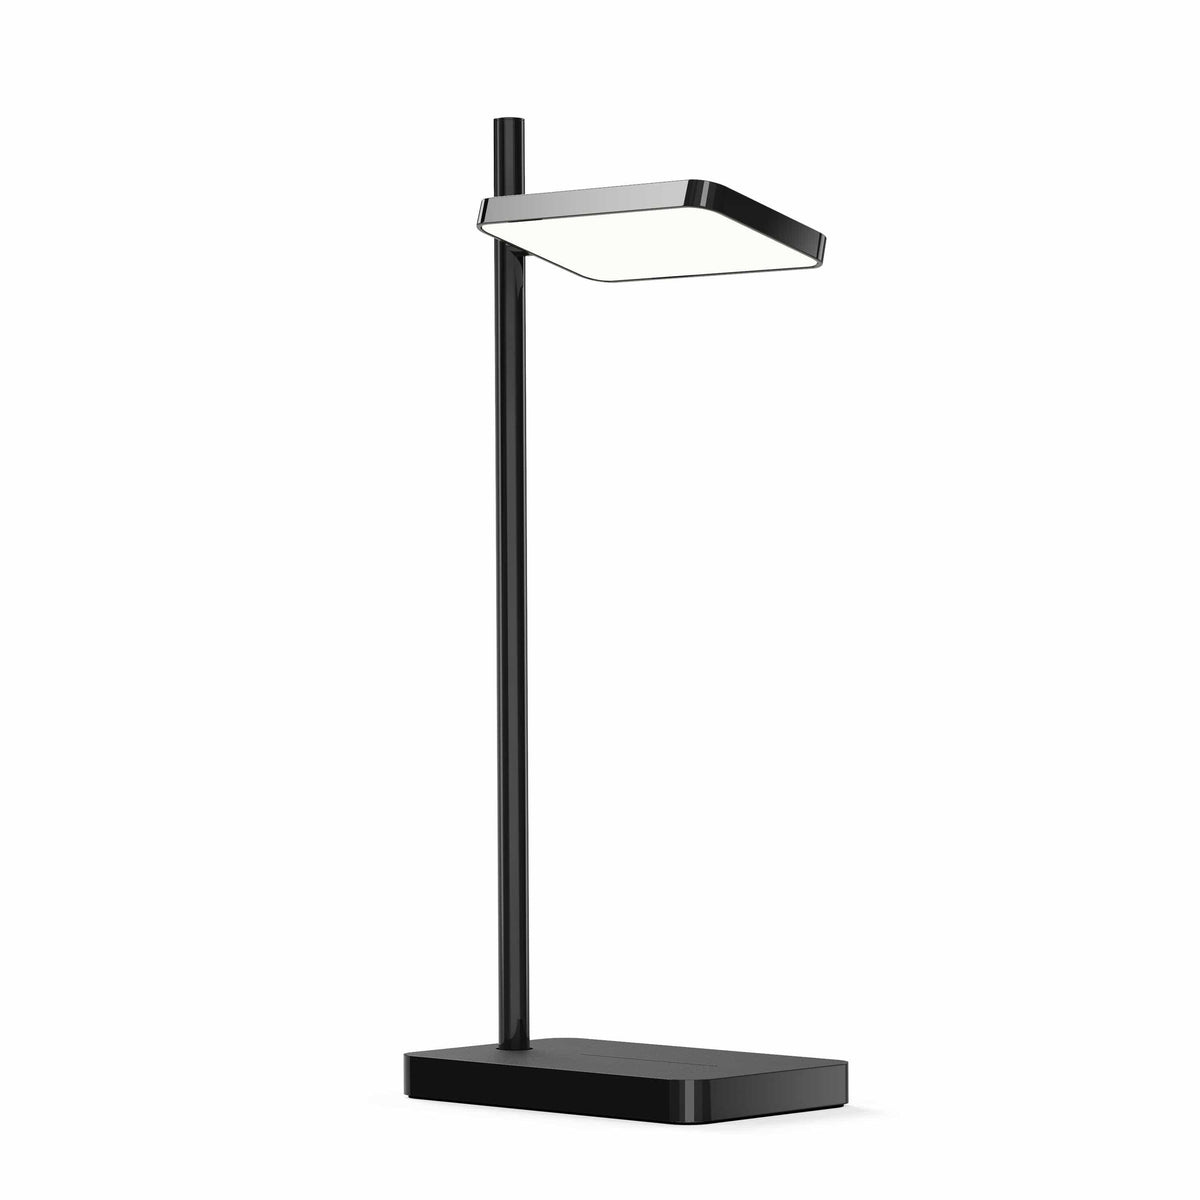 Pablo Designs - Talia Table Lamp - TALI TBL BLK | Montreal Lighting & Hardware